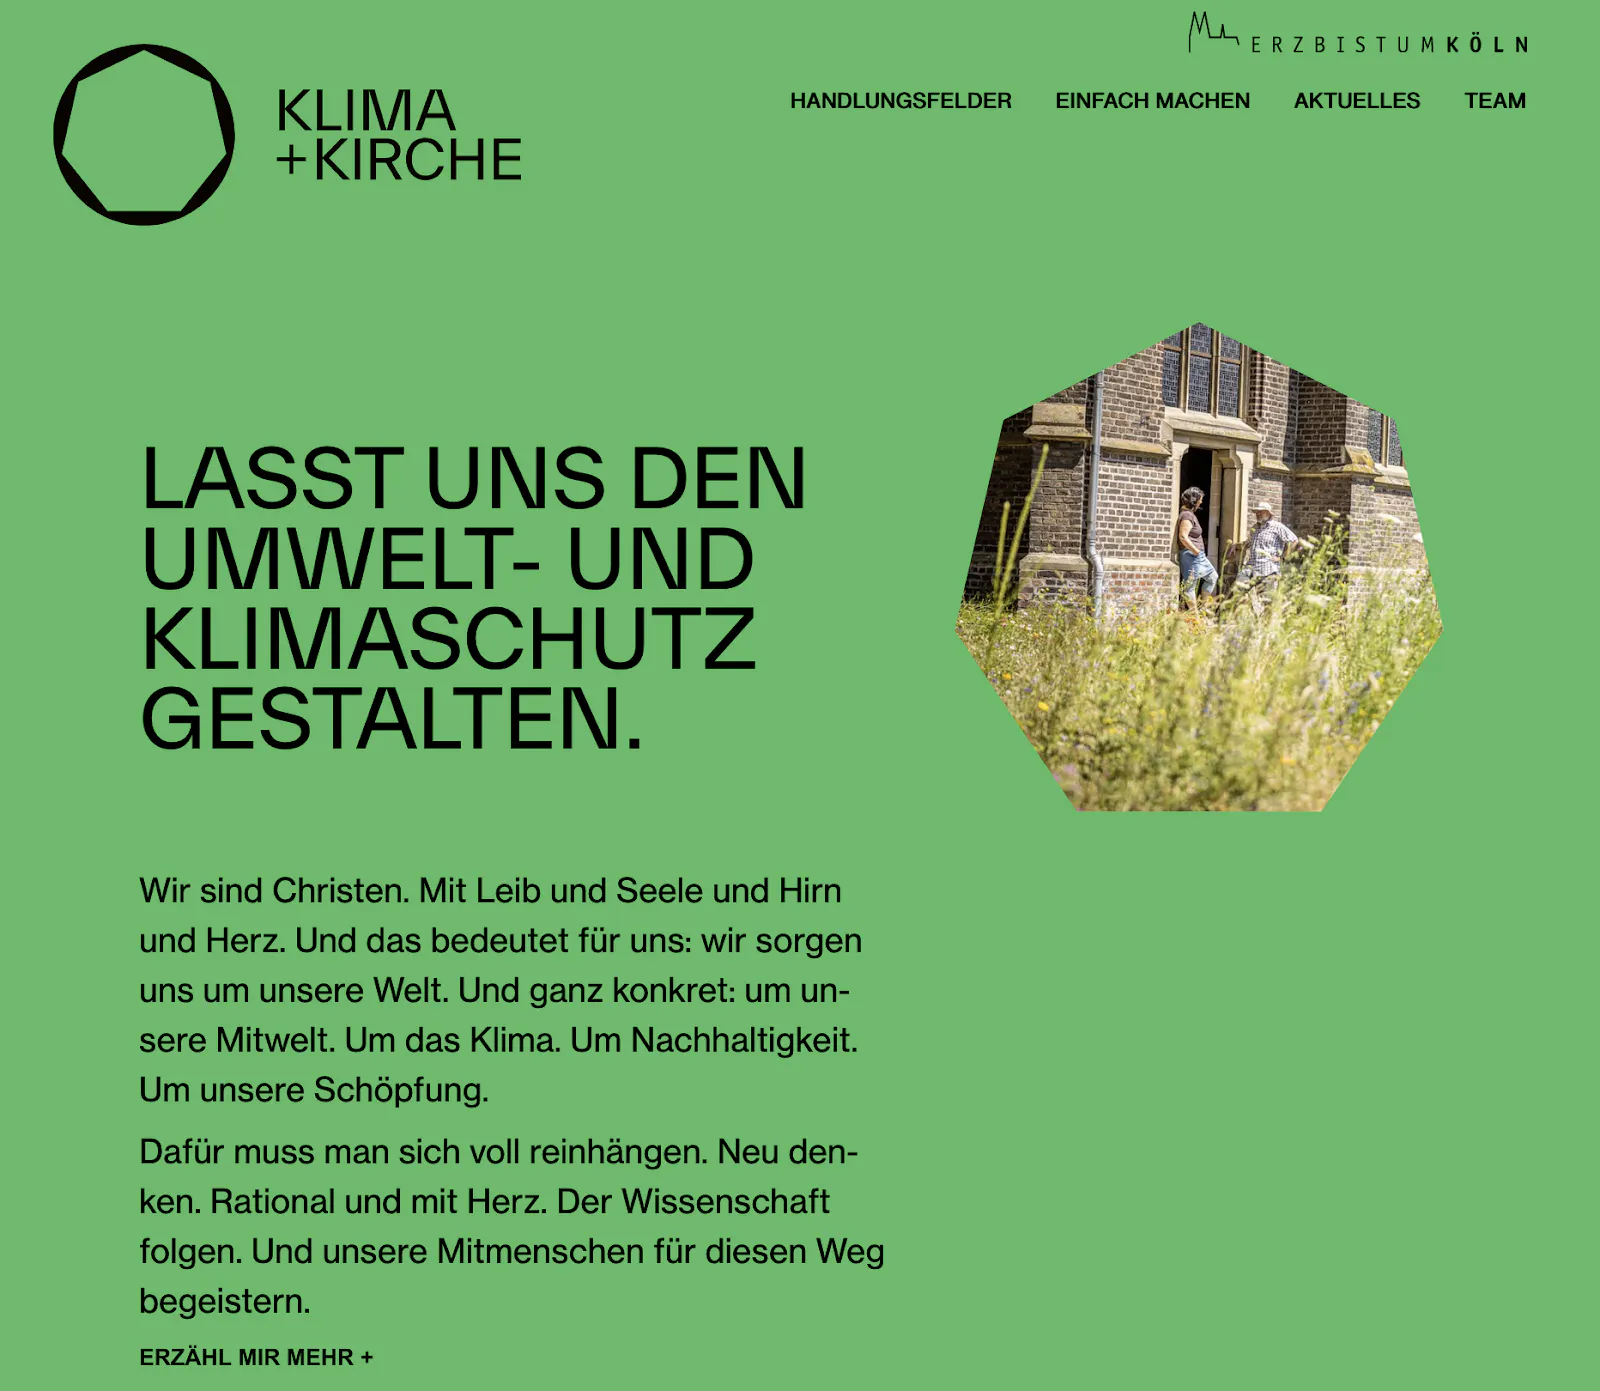 Klima + Kirche Website des Erzbistums Köln